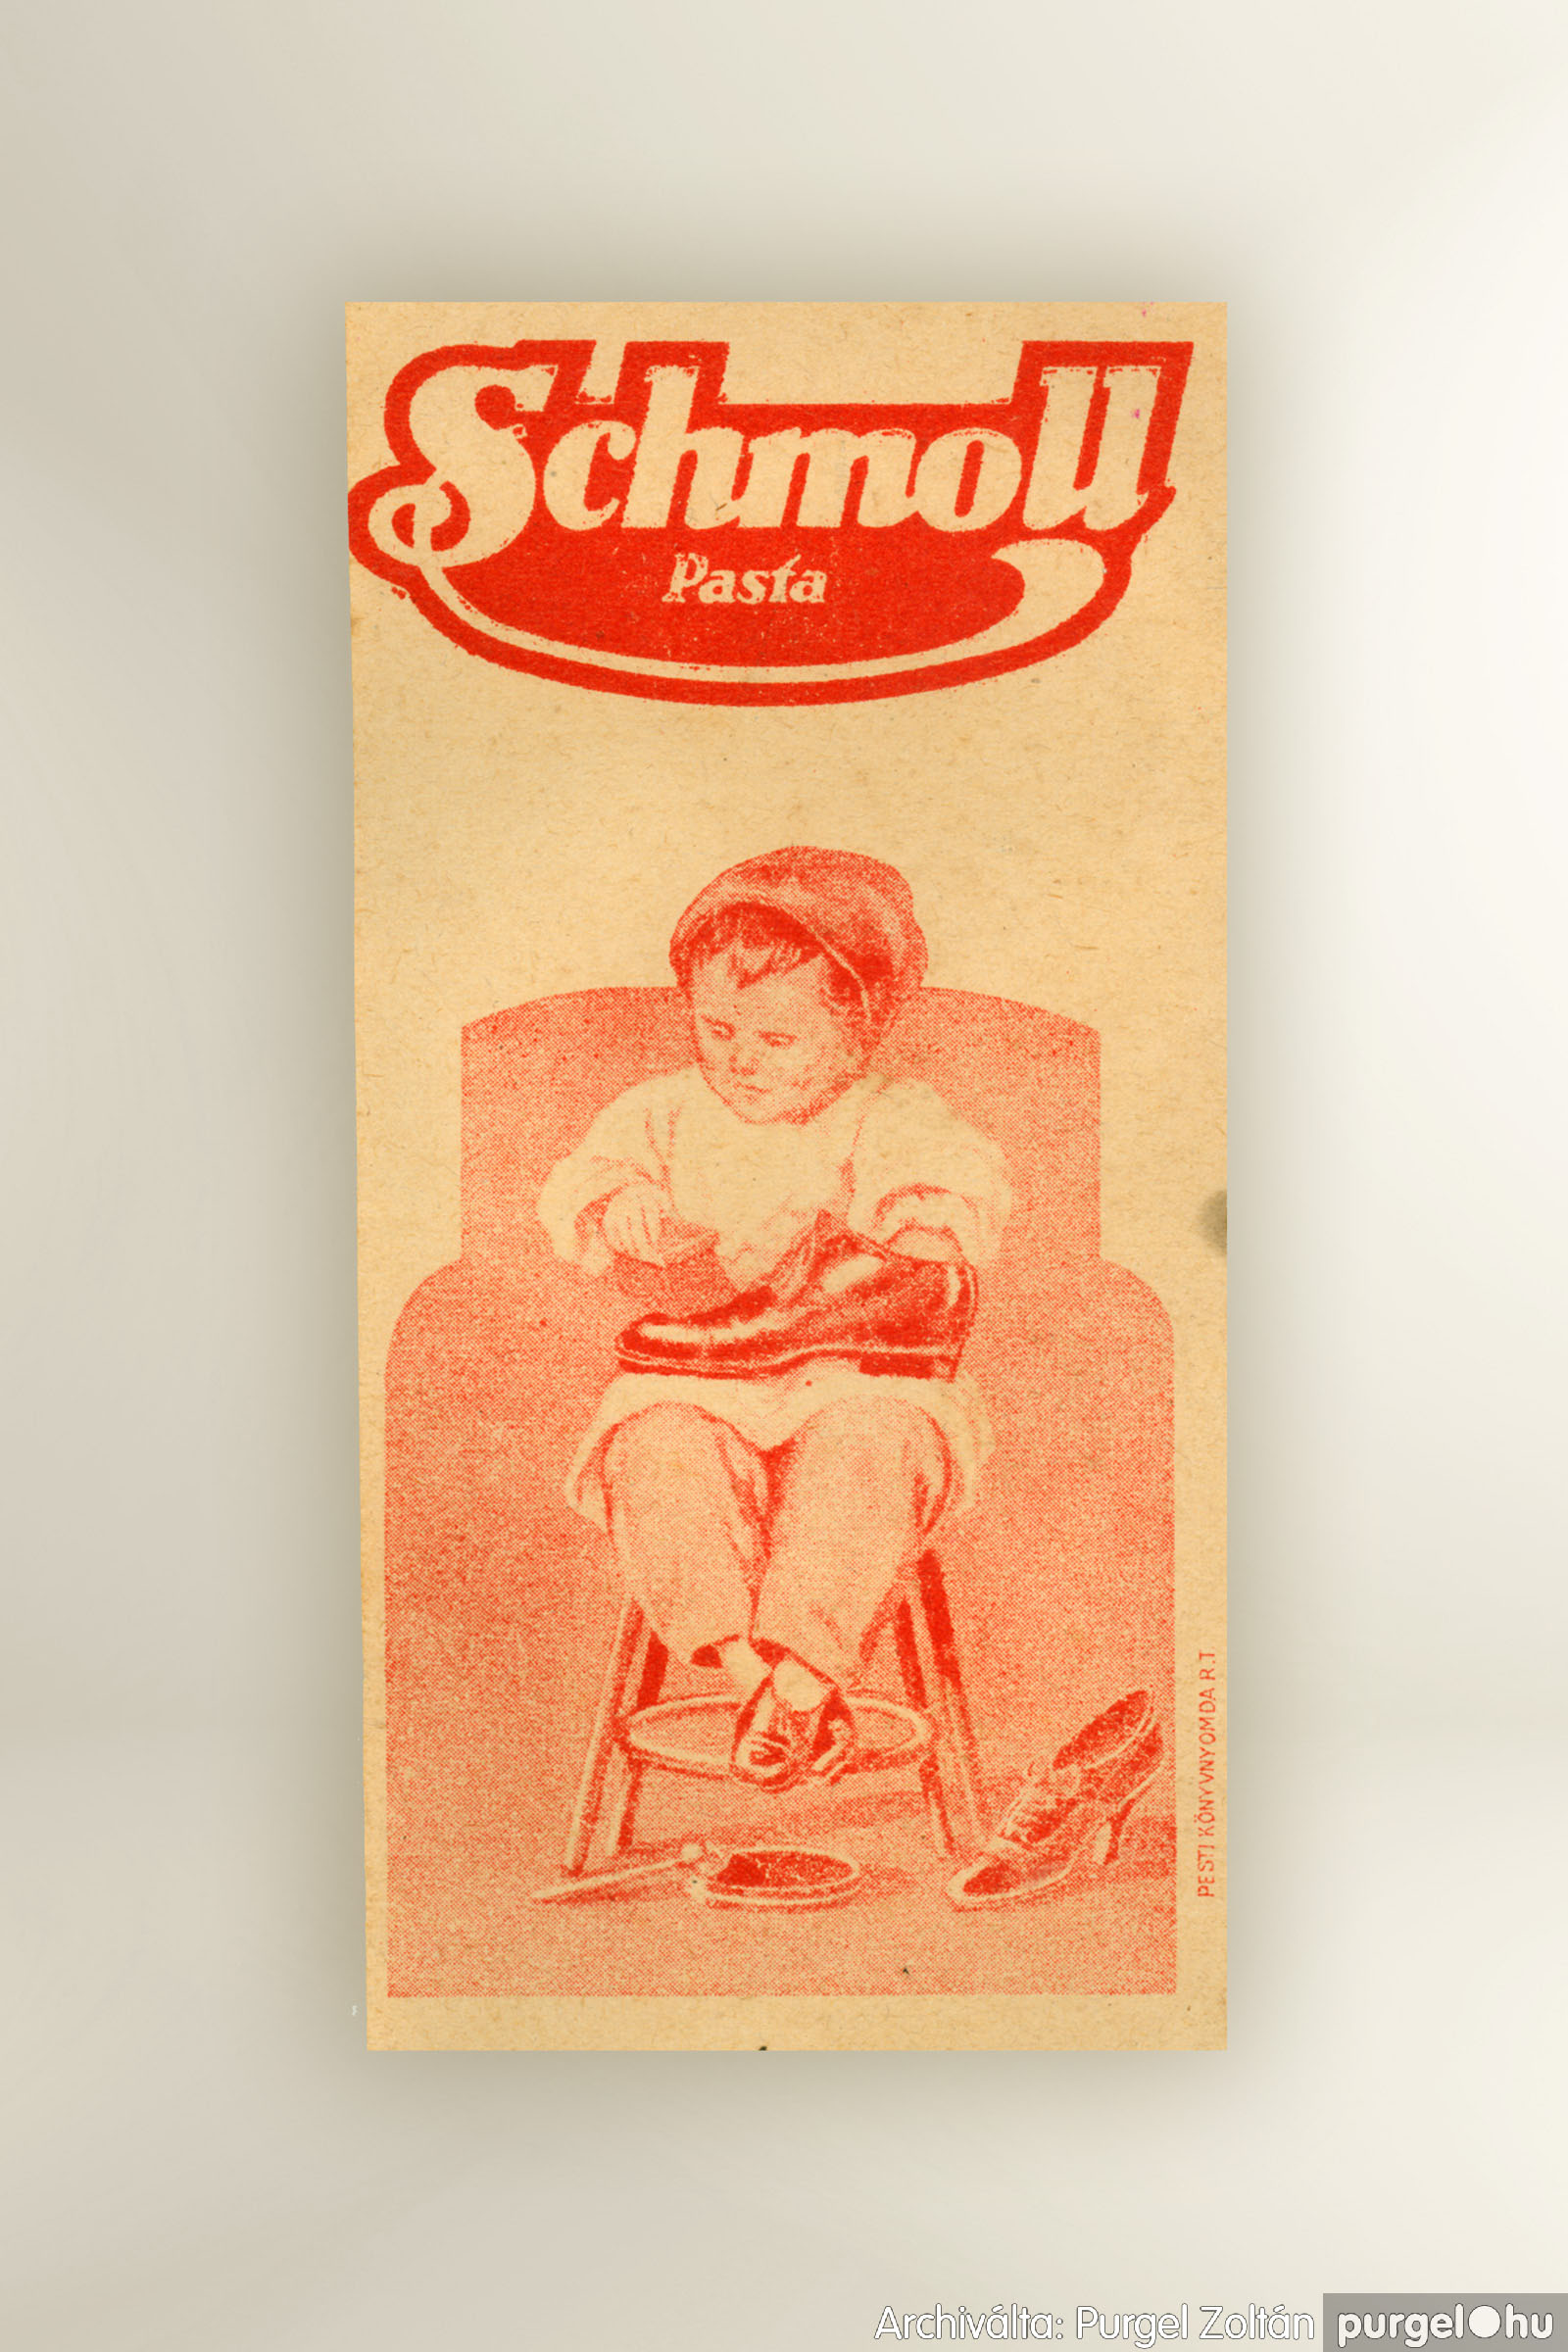 045 Schmoll Pasta 4. – Archiválta：PURGEL ZOLTÁN©.jpg